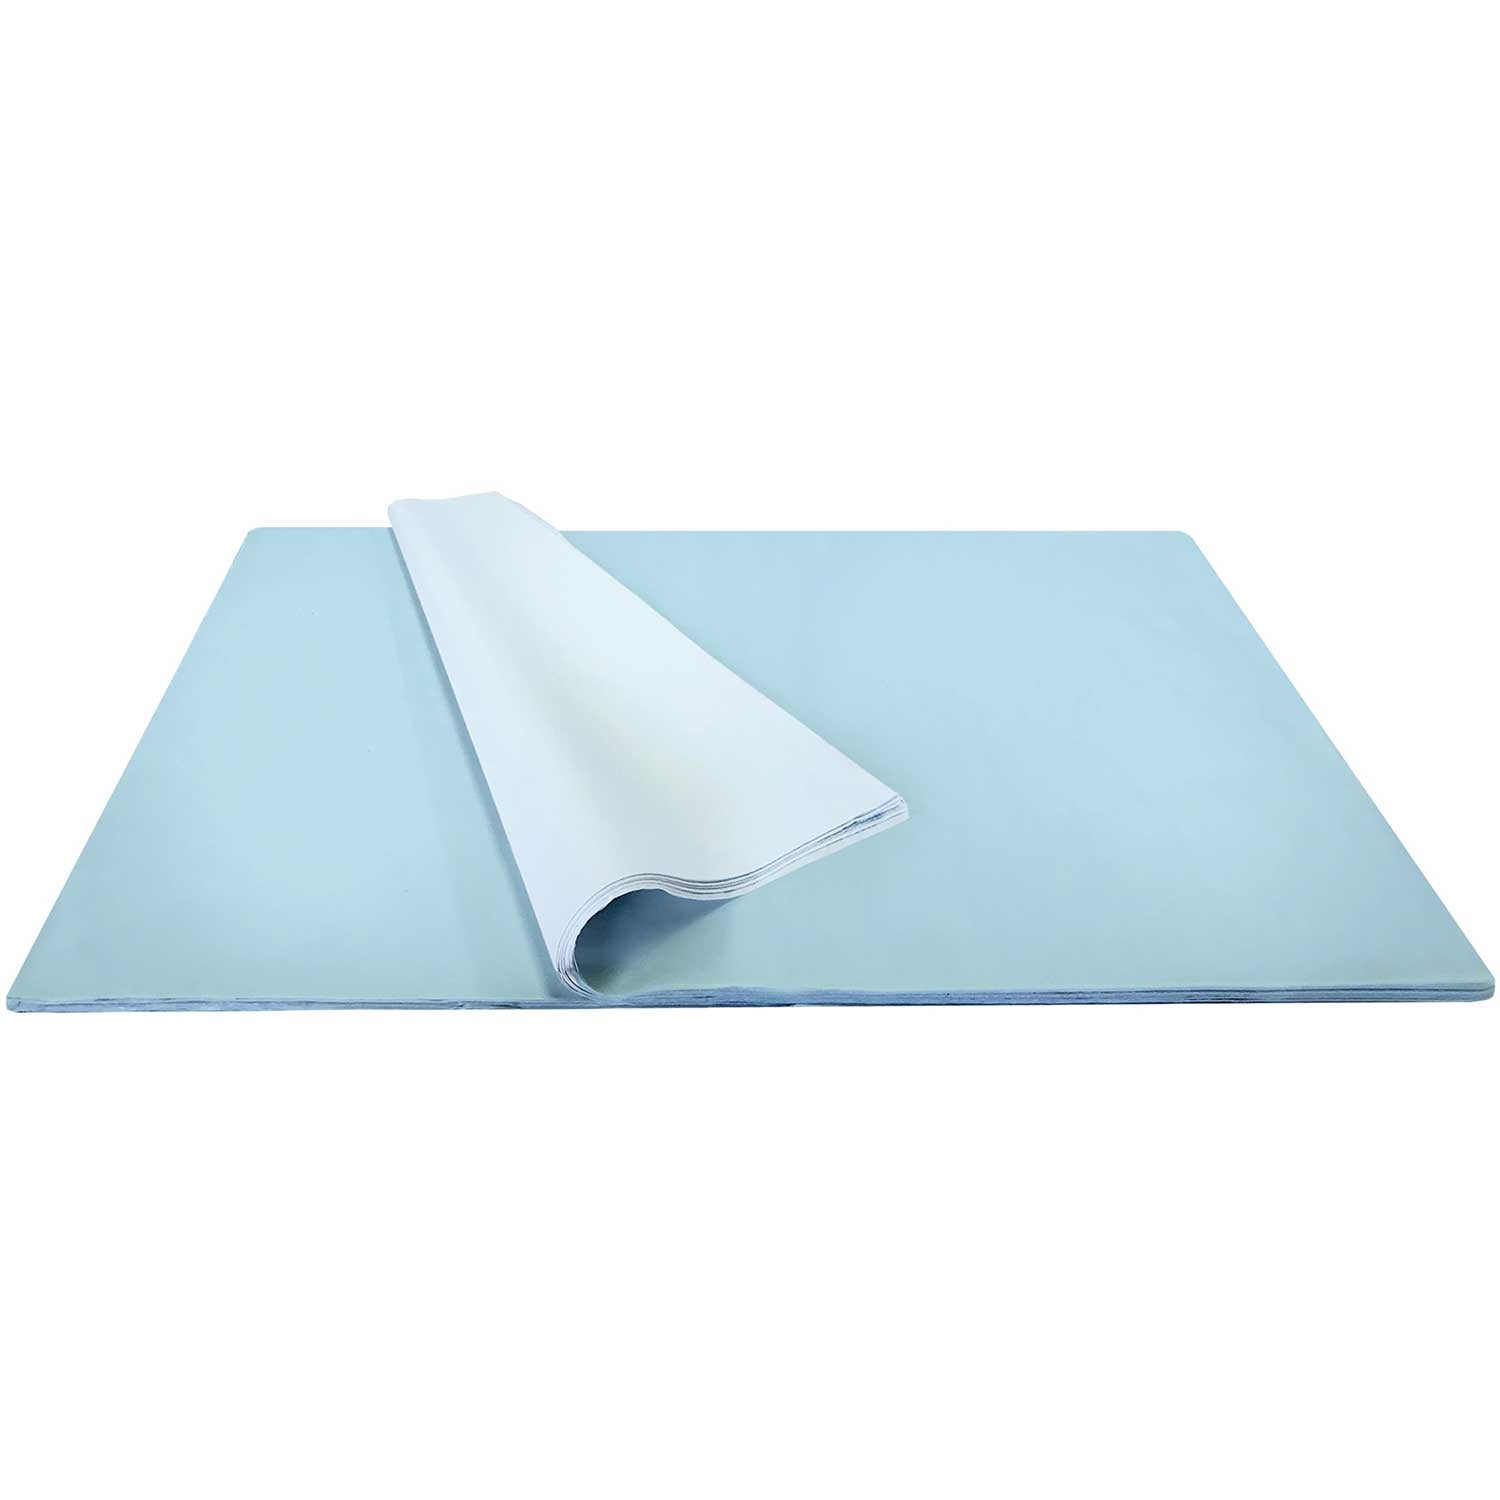 Jillson & Roberts 20 x 26 Gift Tissue, Pastel Blue- 96 Folded Sheets